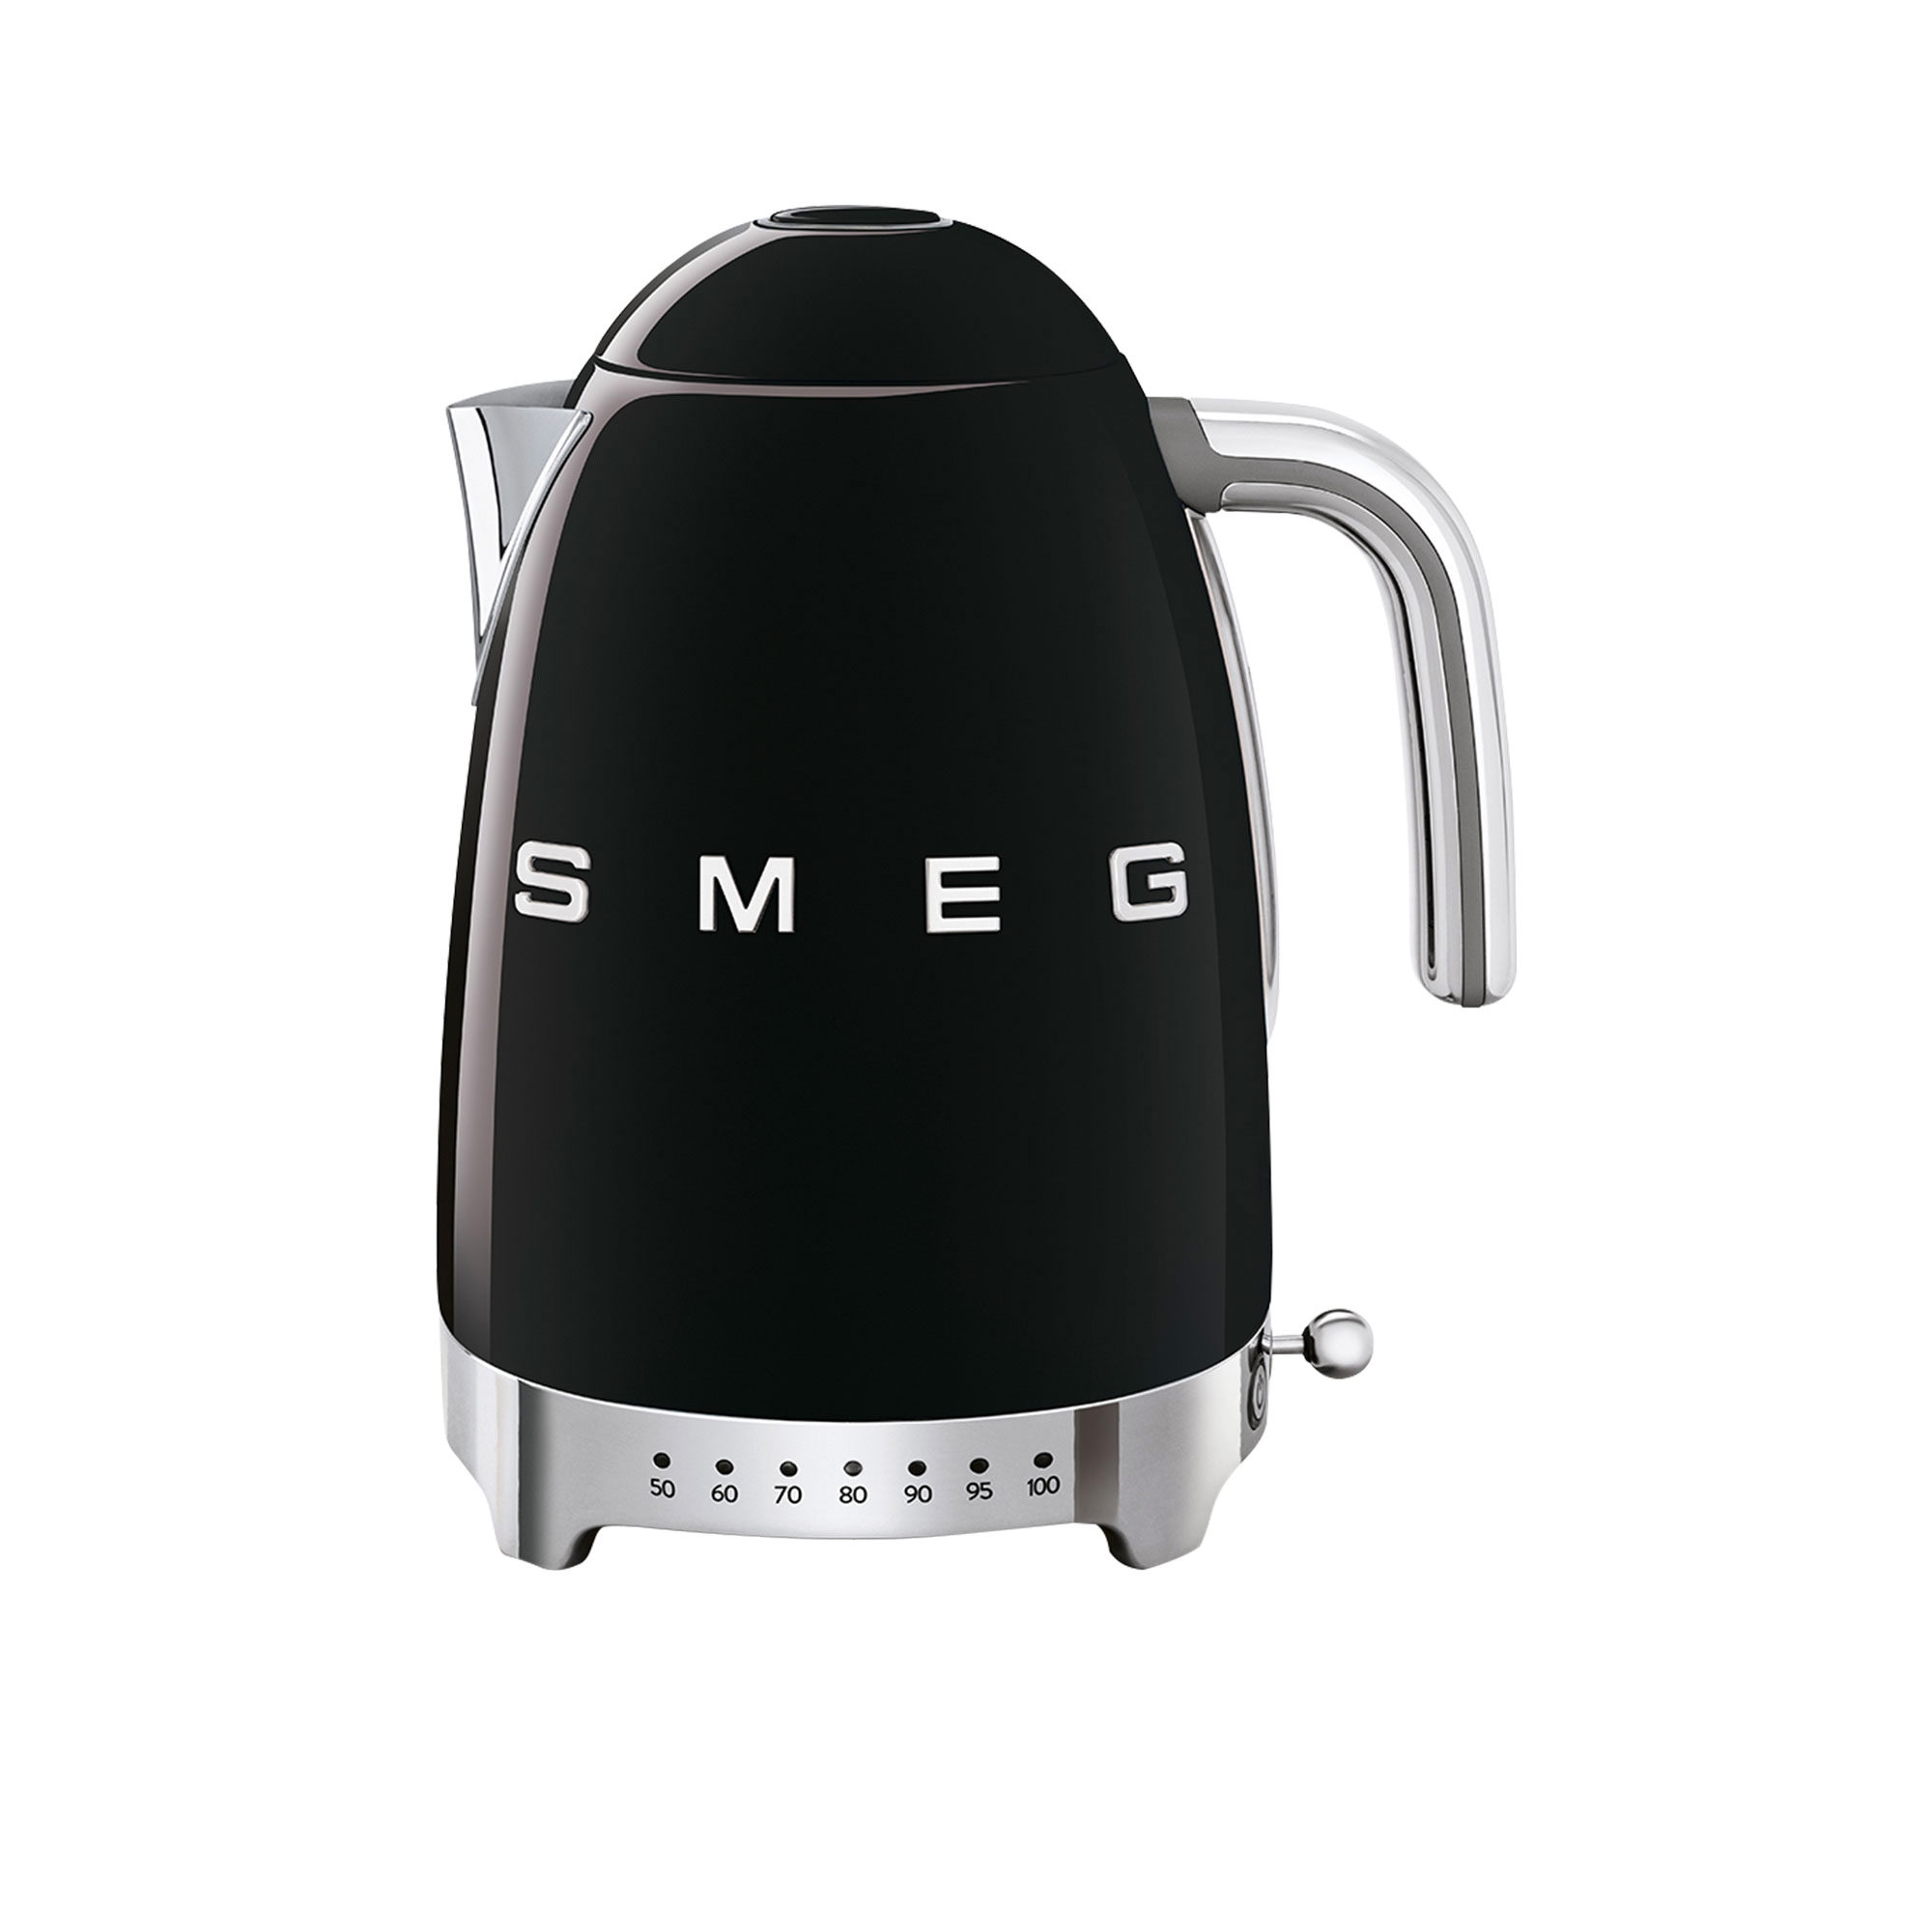 Smeg 50's Retro Style Variable Temperature Kettle 1.7L Black Image 1